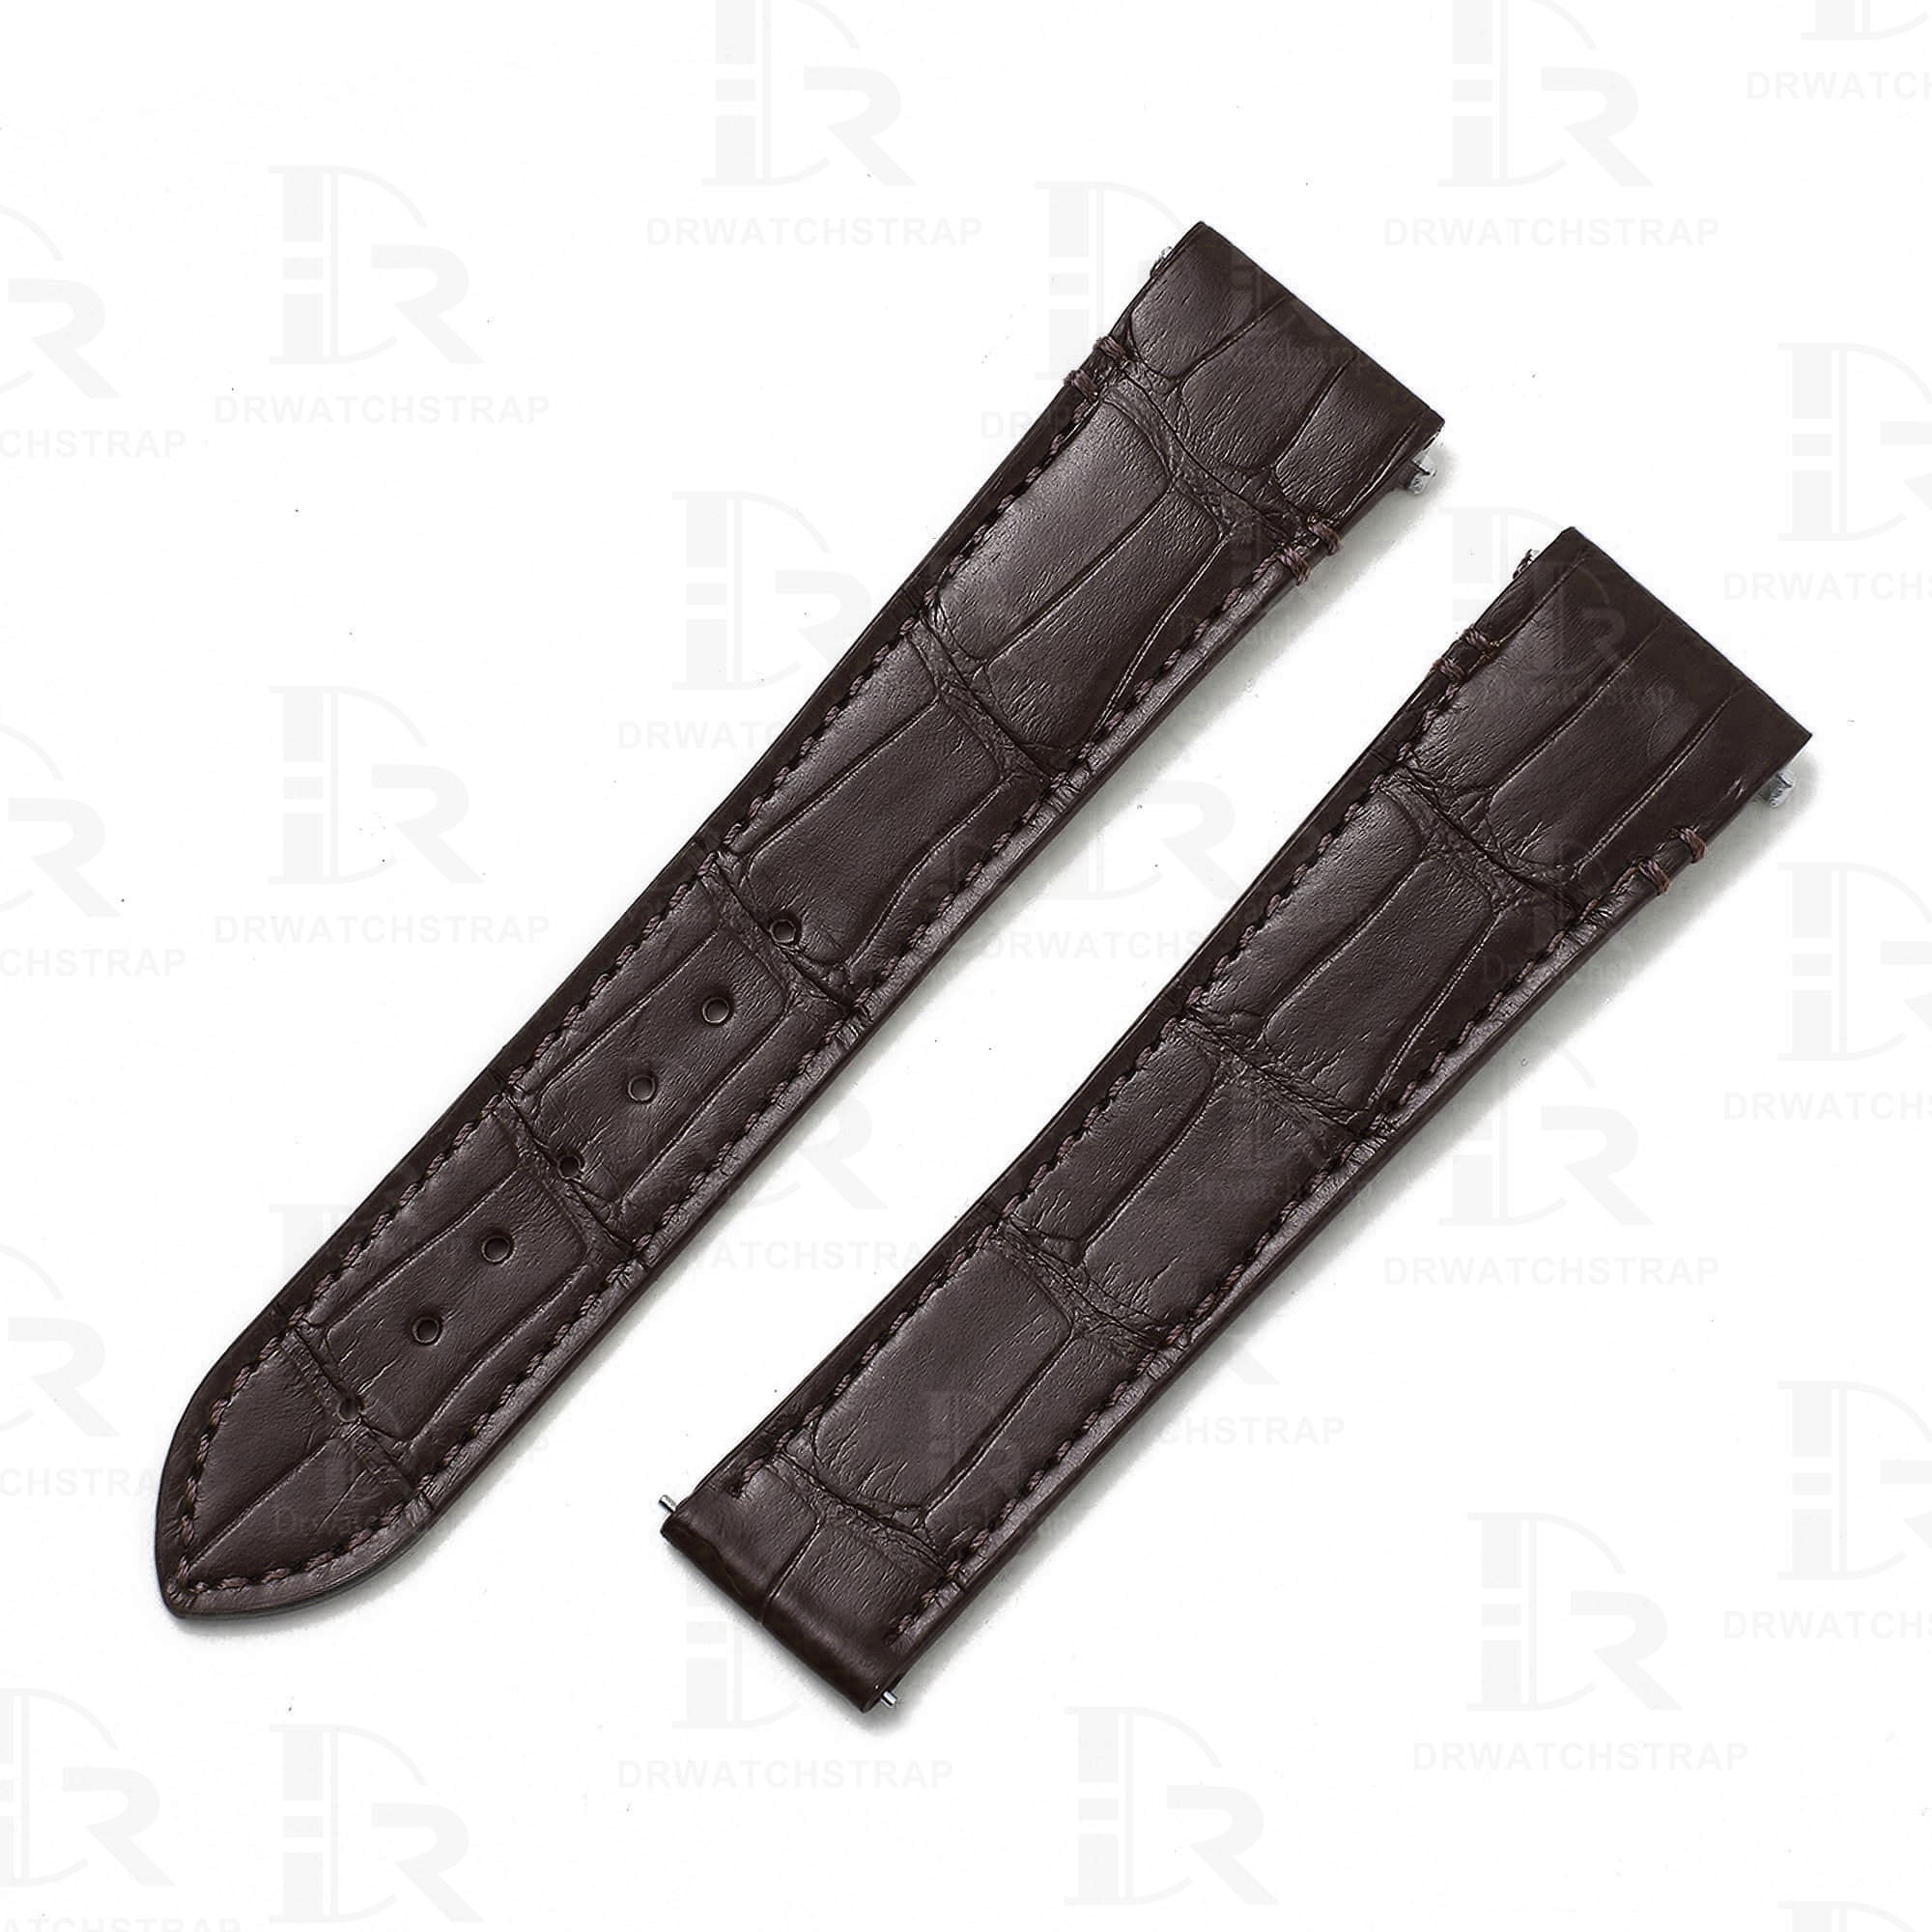 Brown alligator leather watch strap for Cartier Santos